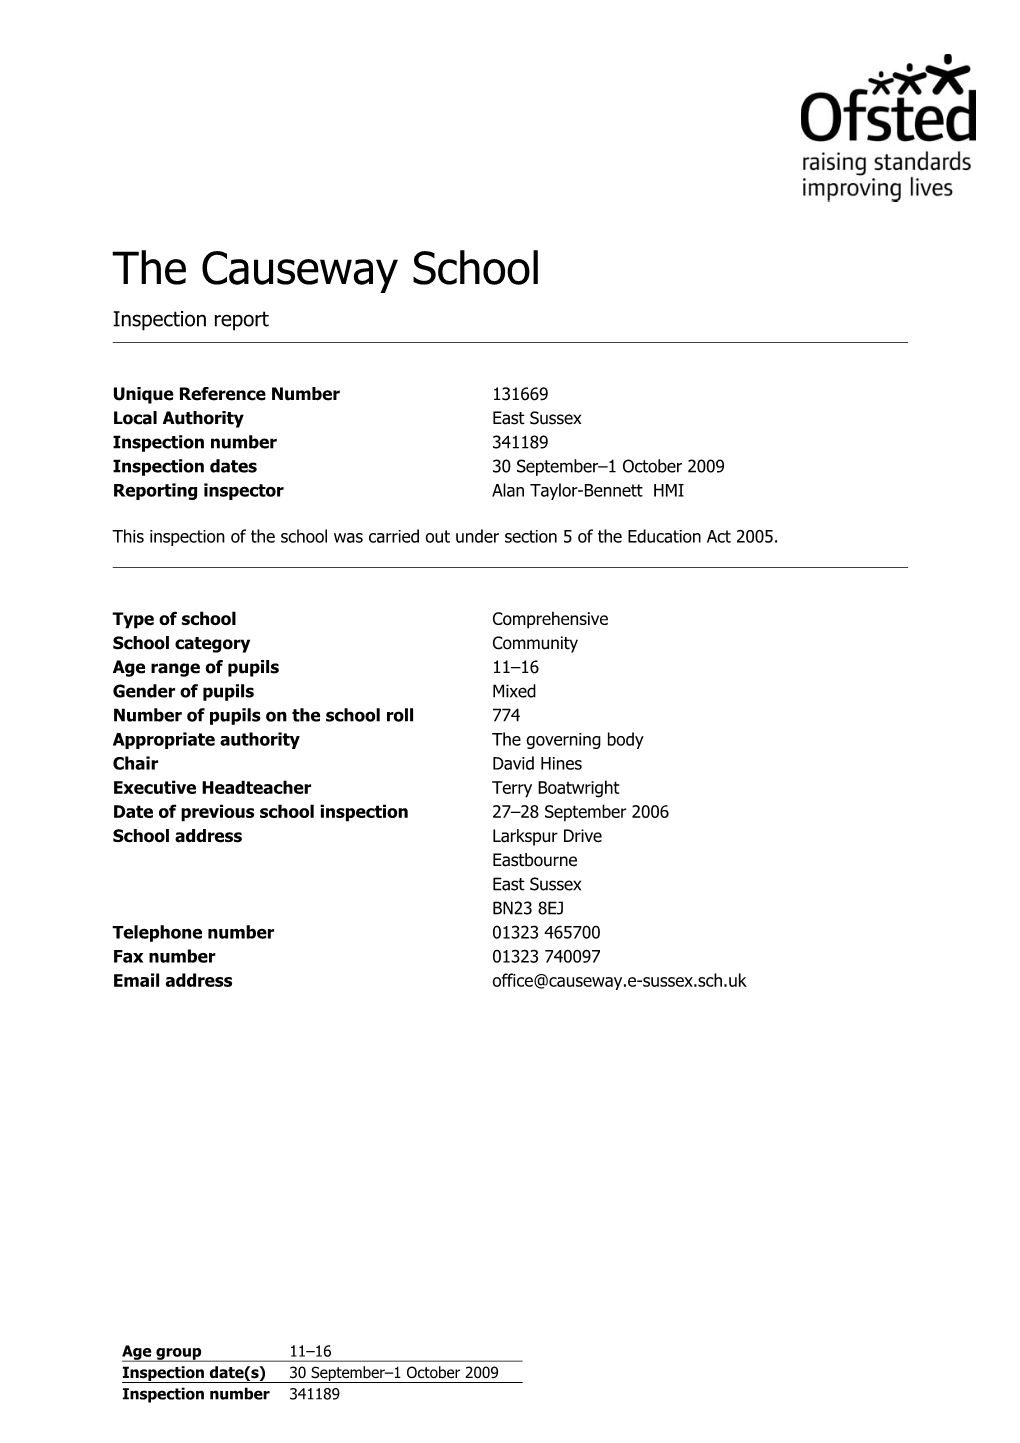 The Causeway School Inspection Report